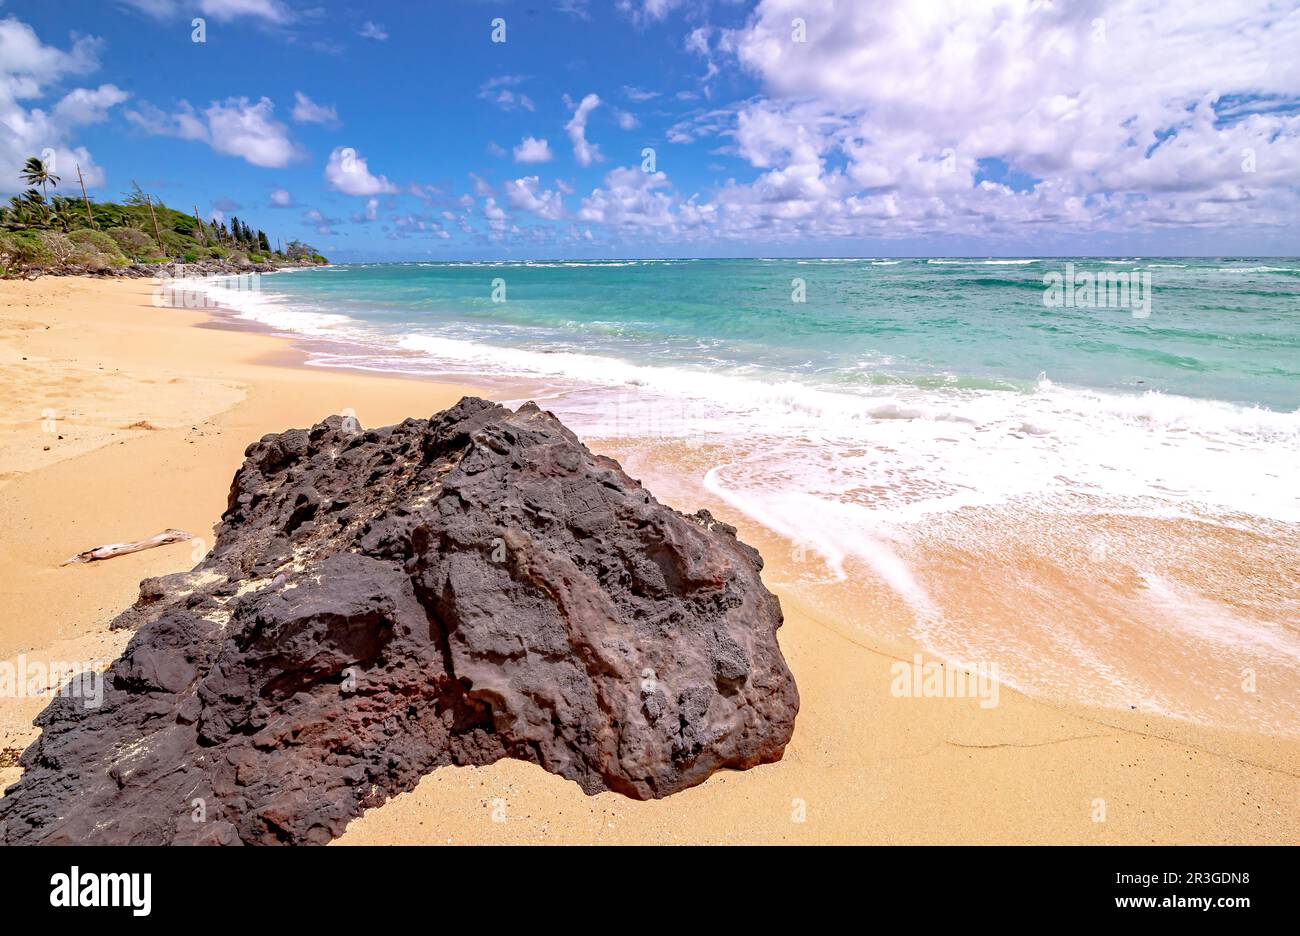 Ocean beach and pscenic views at Kualoa, Oahu, Hawaii Stock Photo